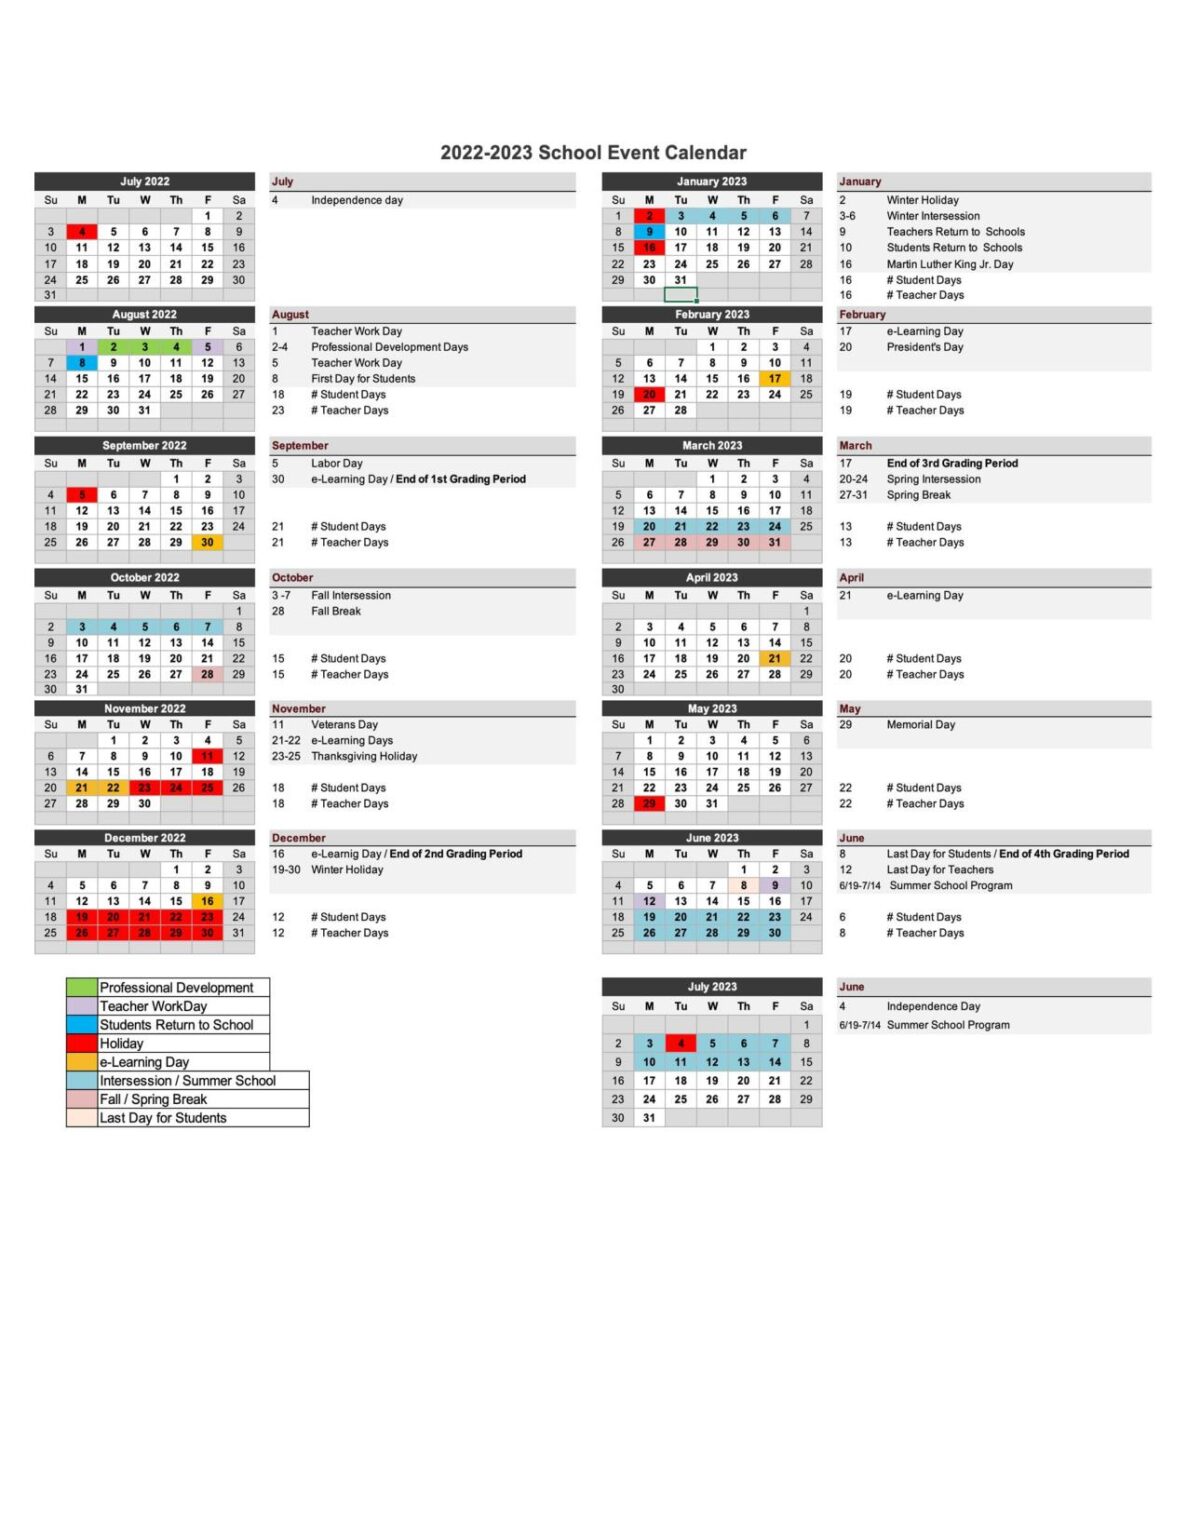 Birmingham City Schools Calendar 20222023 in PDF